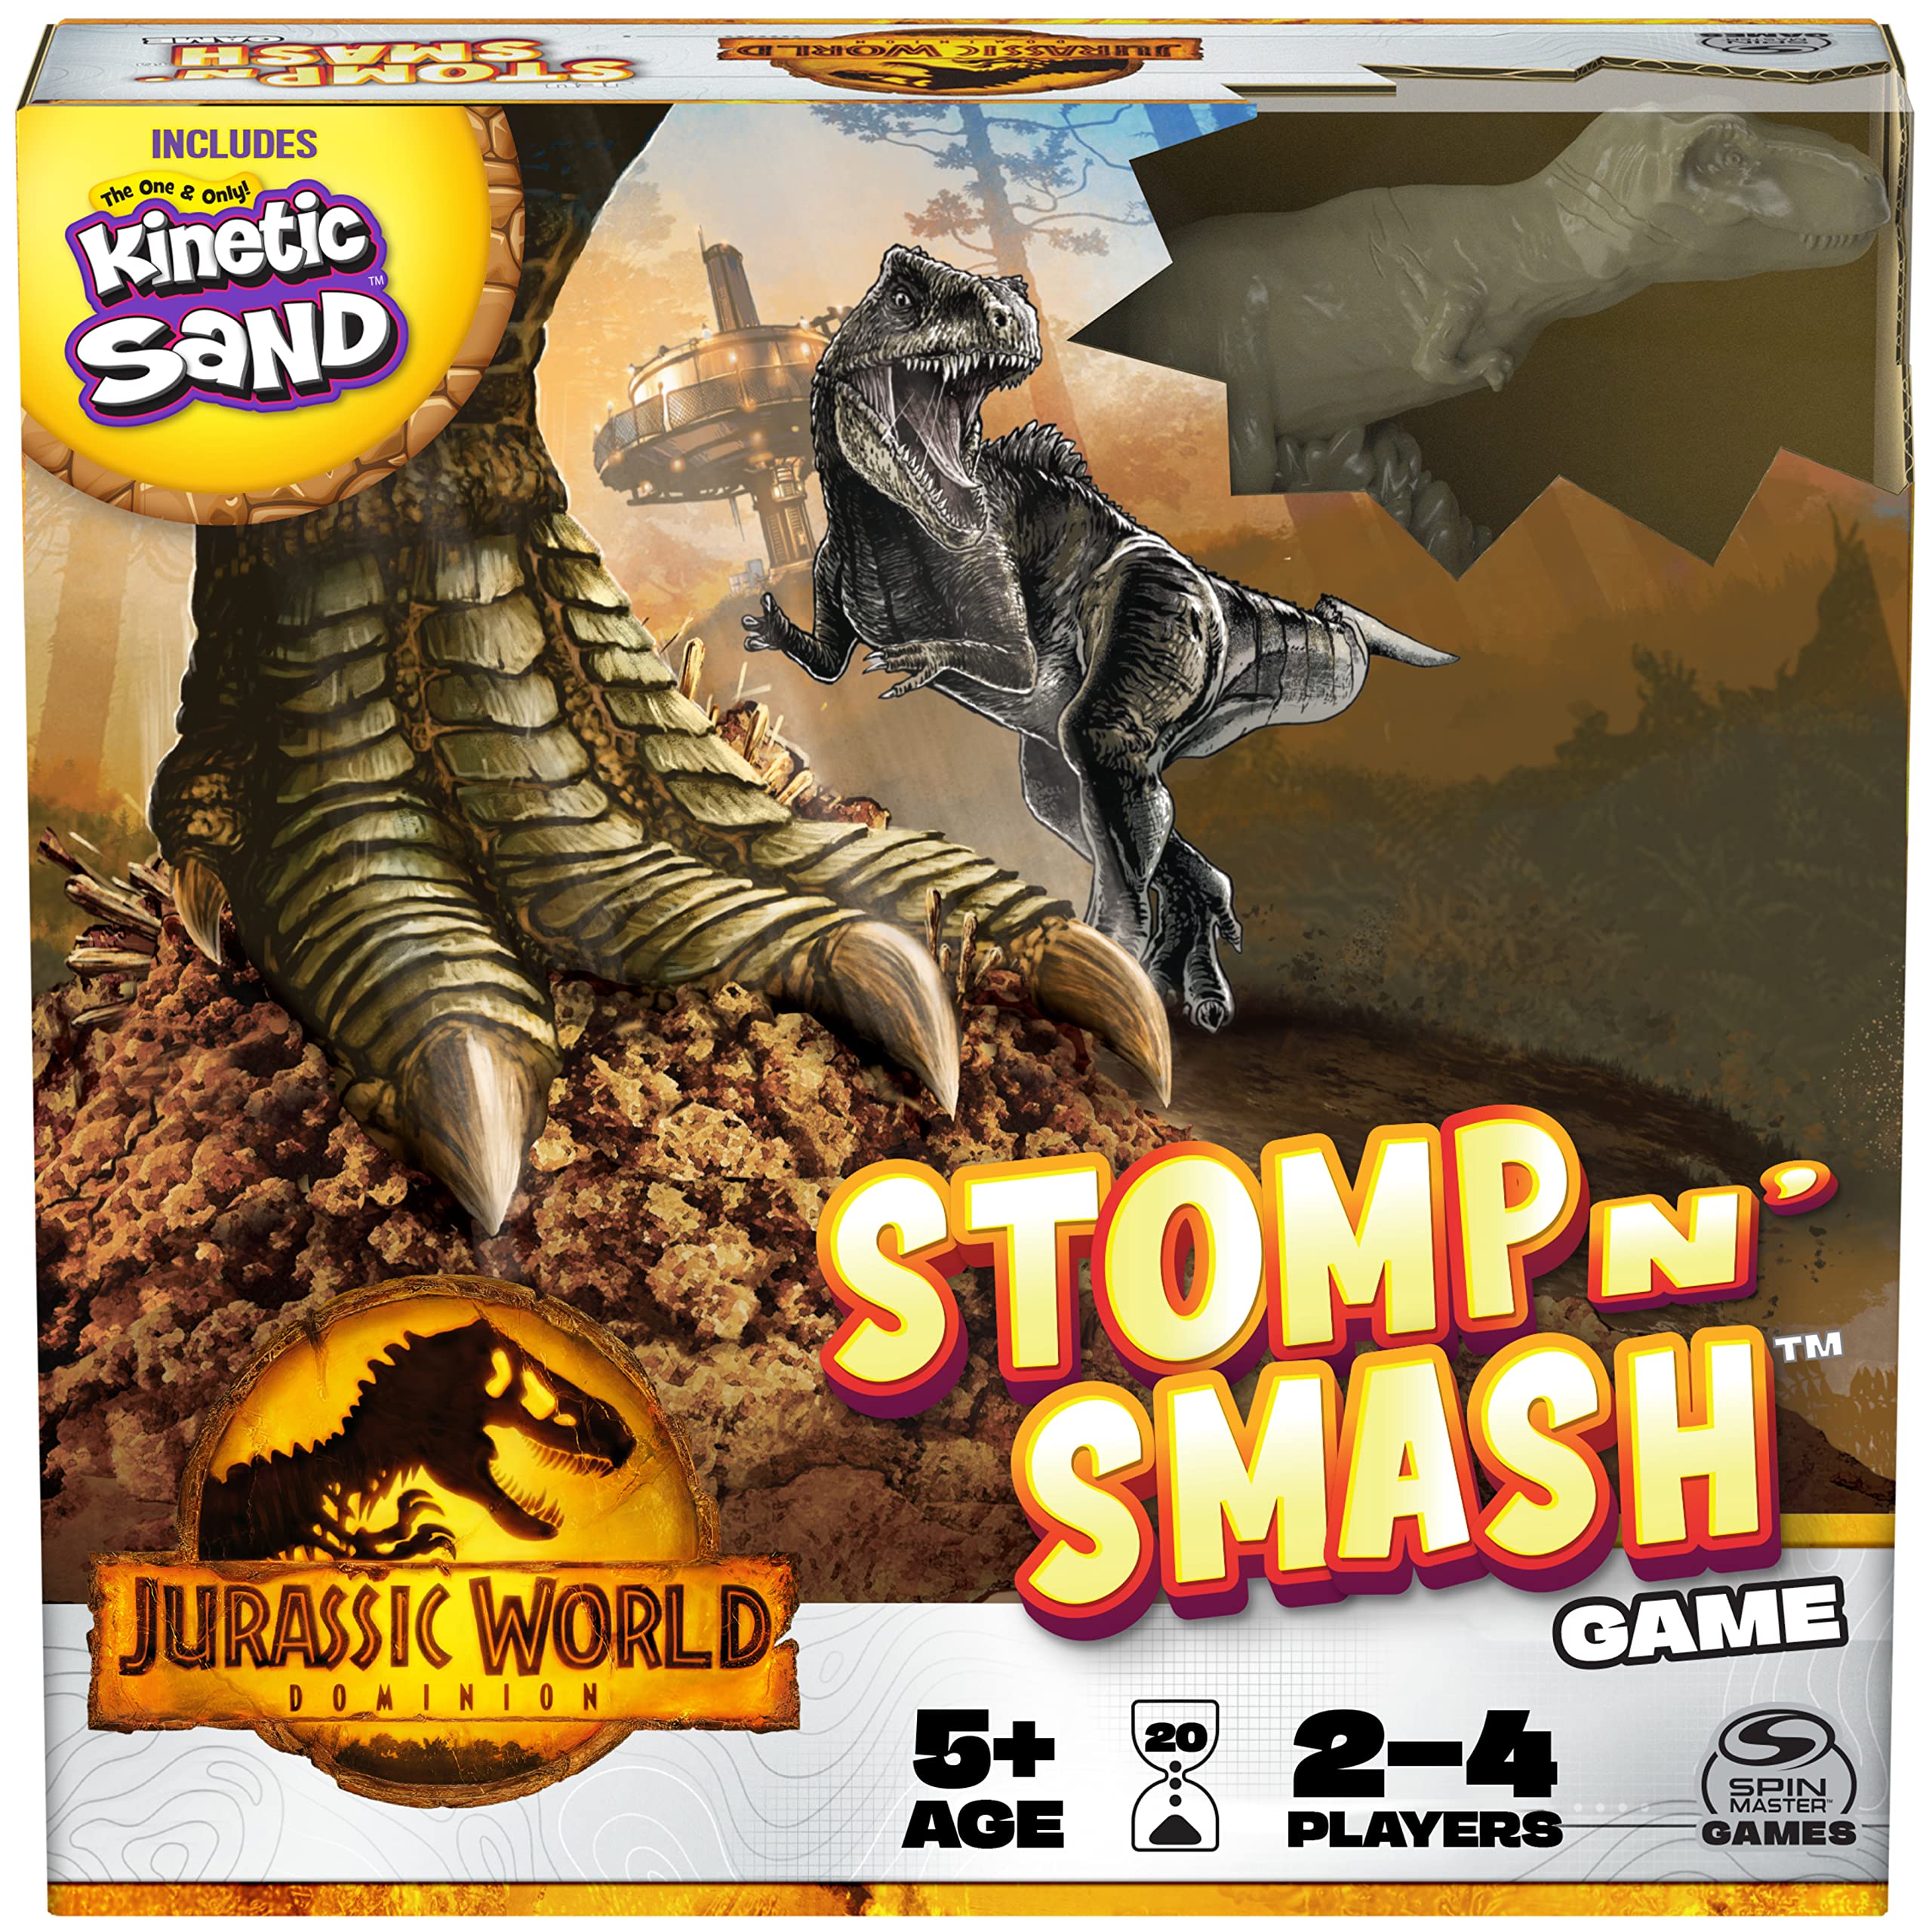 Jurassic World Dominion: Stomp N' Smash Kinetic Sand Game - $5.24 - Amazon